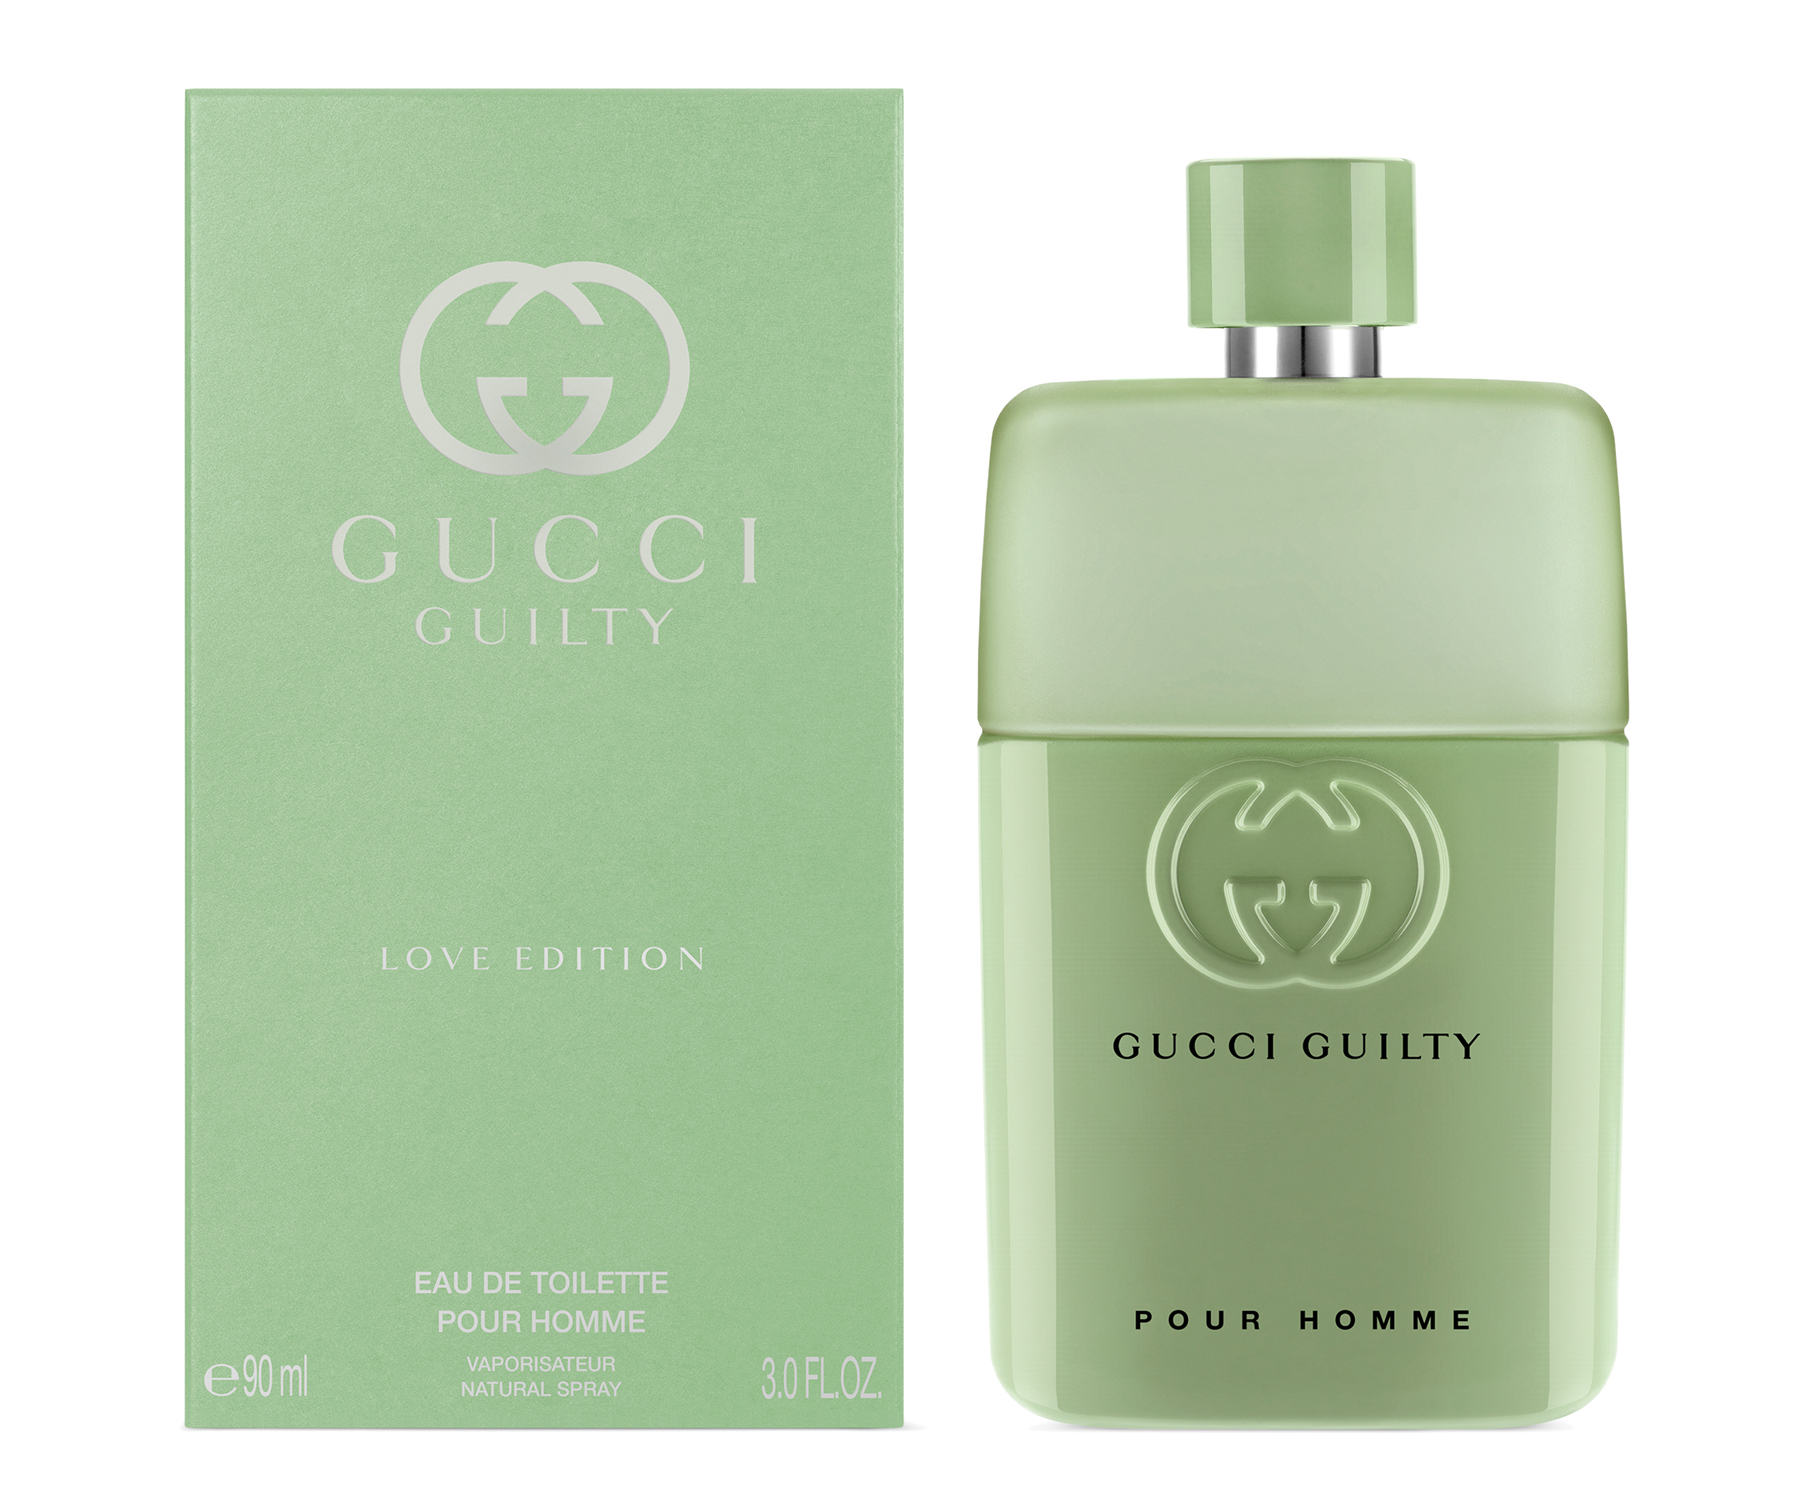 Gucci Guilty Love Edition Pour Homme Gucci одеколон — новый аромат для